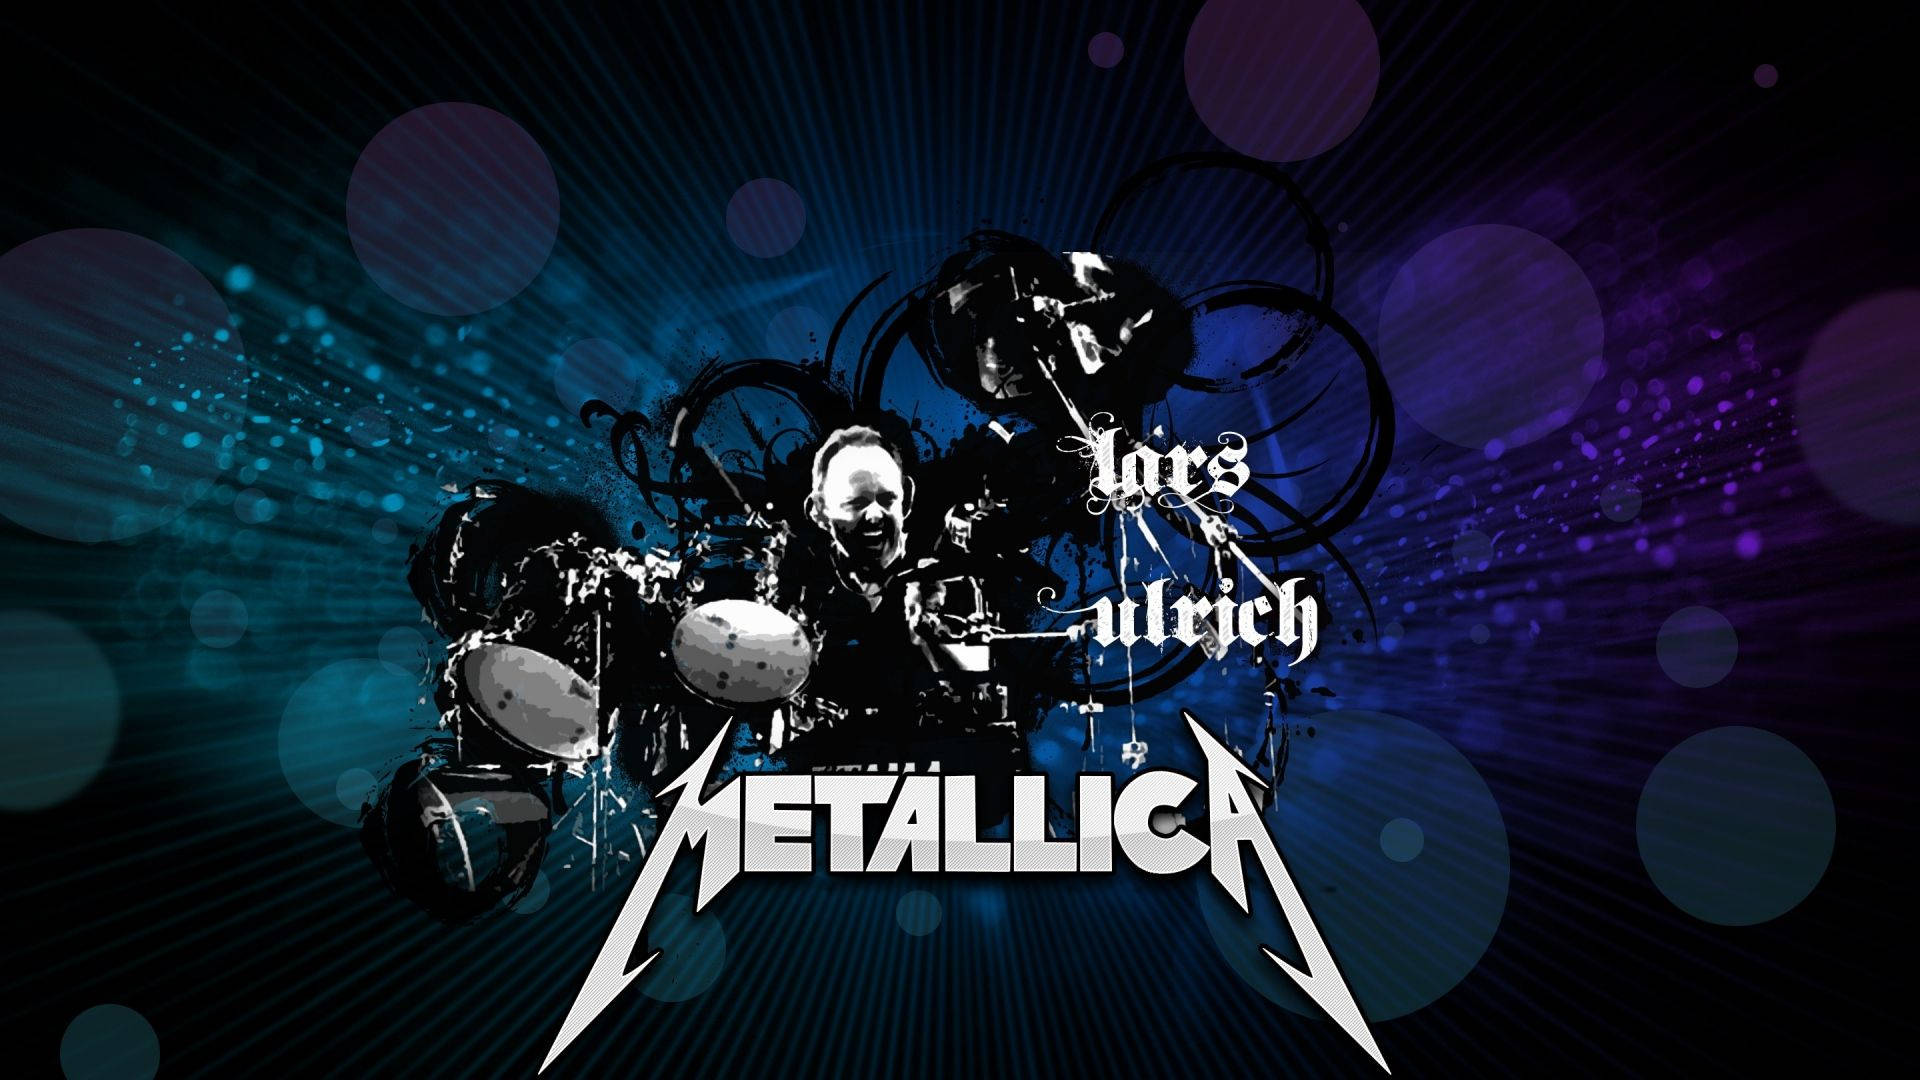 "Drumming the beat of heavy metal, Lars Ulrich of Metallica." Wallpaper